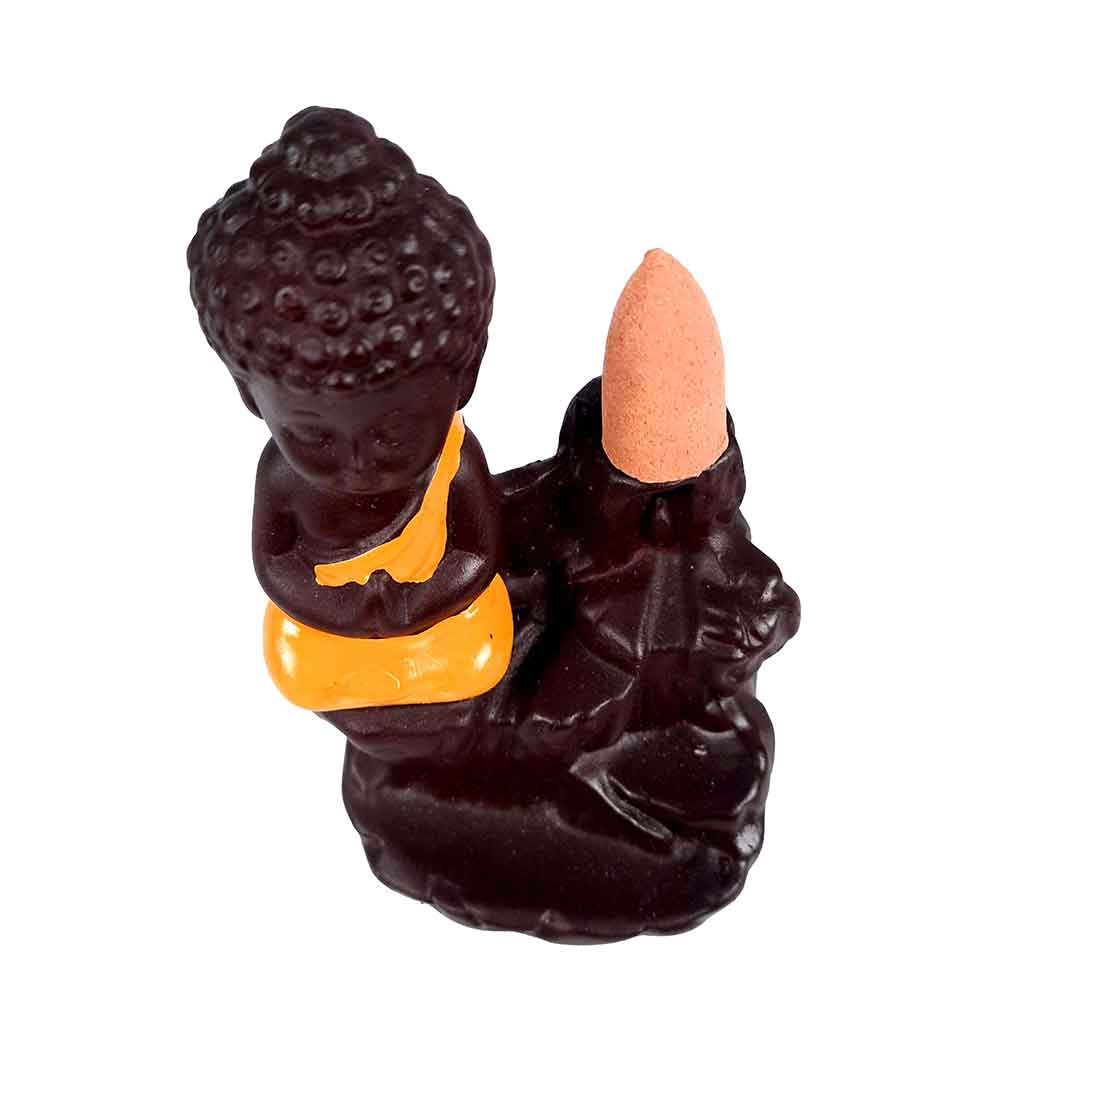 Lord Buddha Smoke Fountain - For Table Decor & Gifts - 4 Inch - ApkaMart